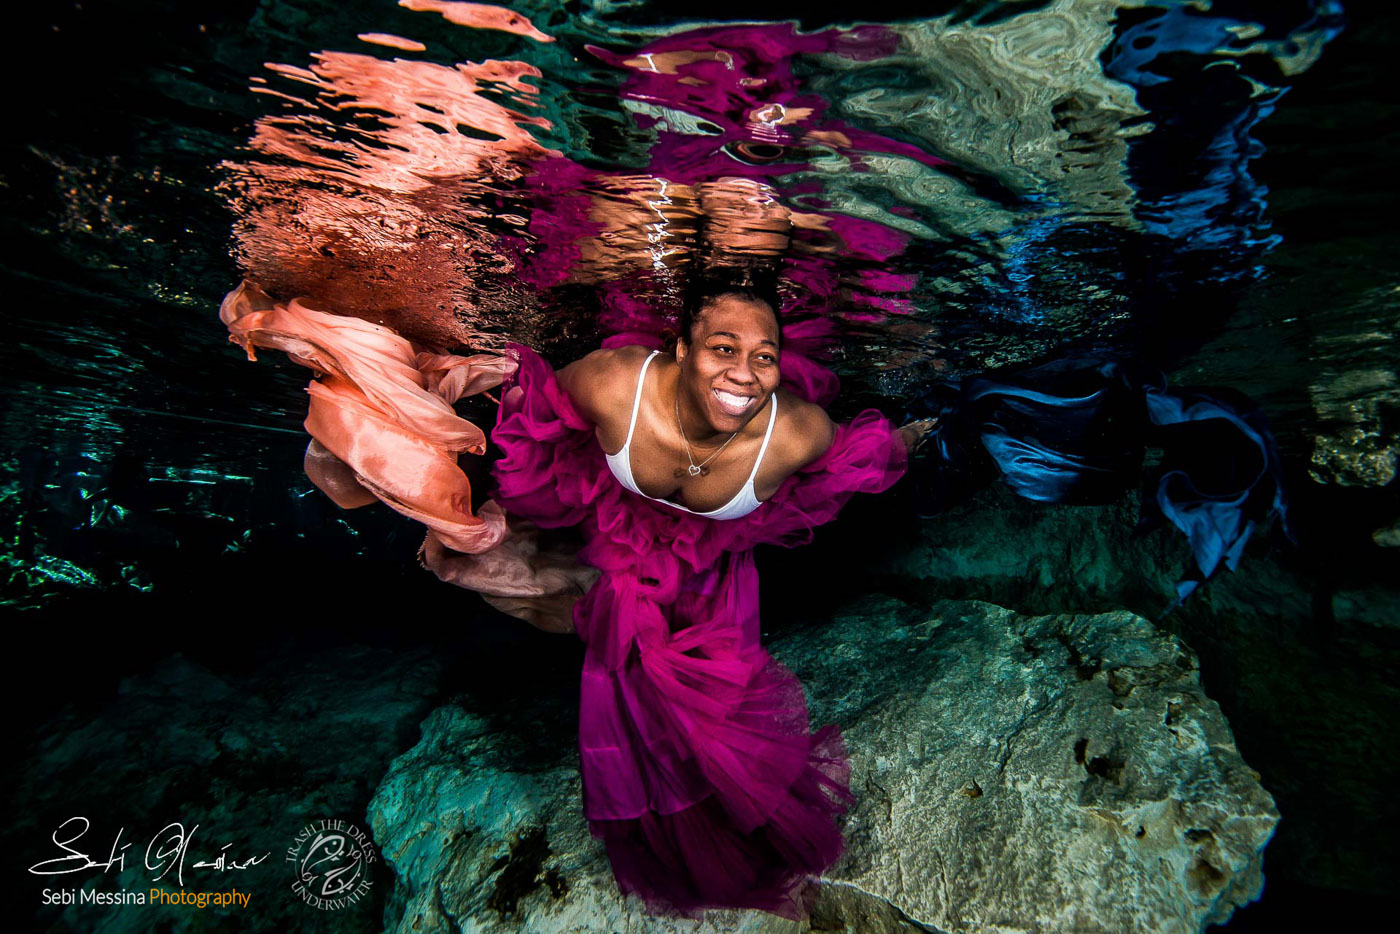 Best cenote photoshoots – Sebi Messina Photography